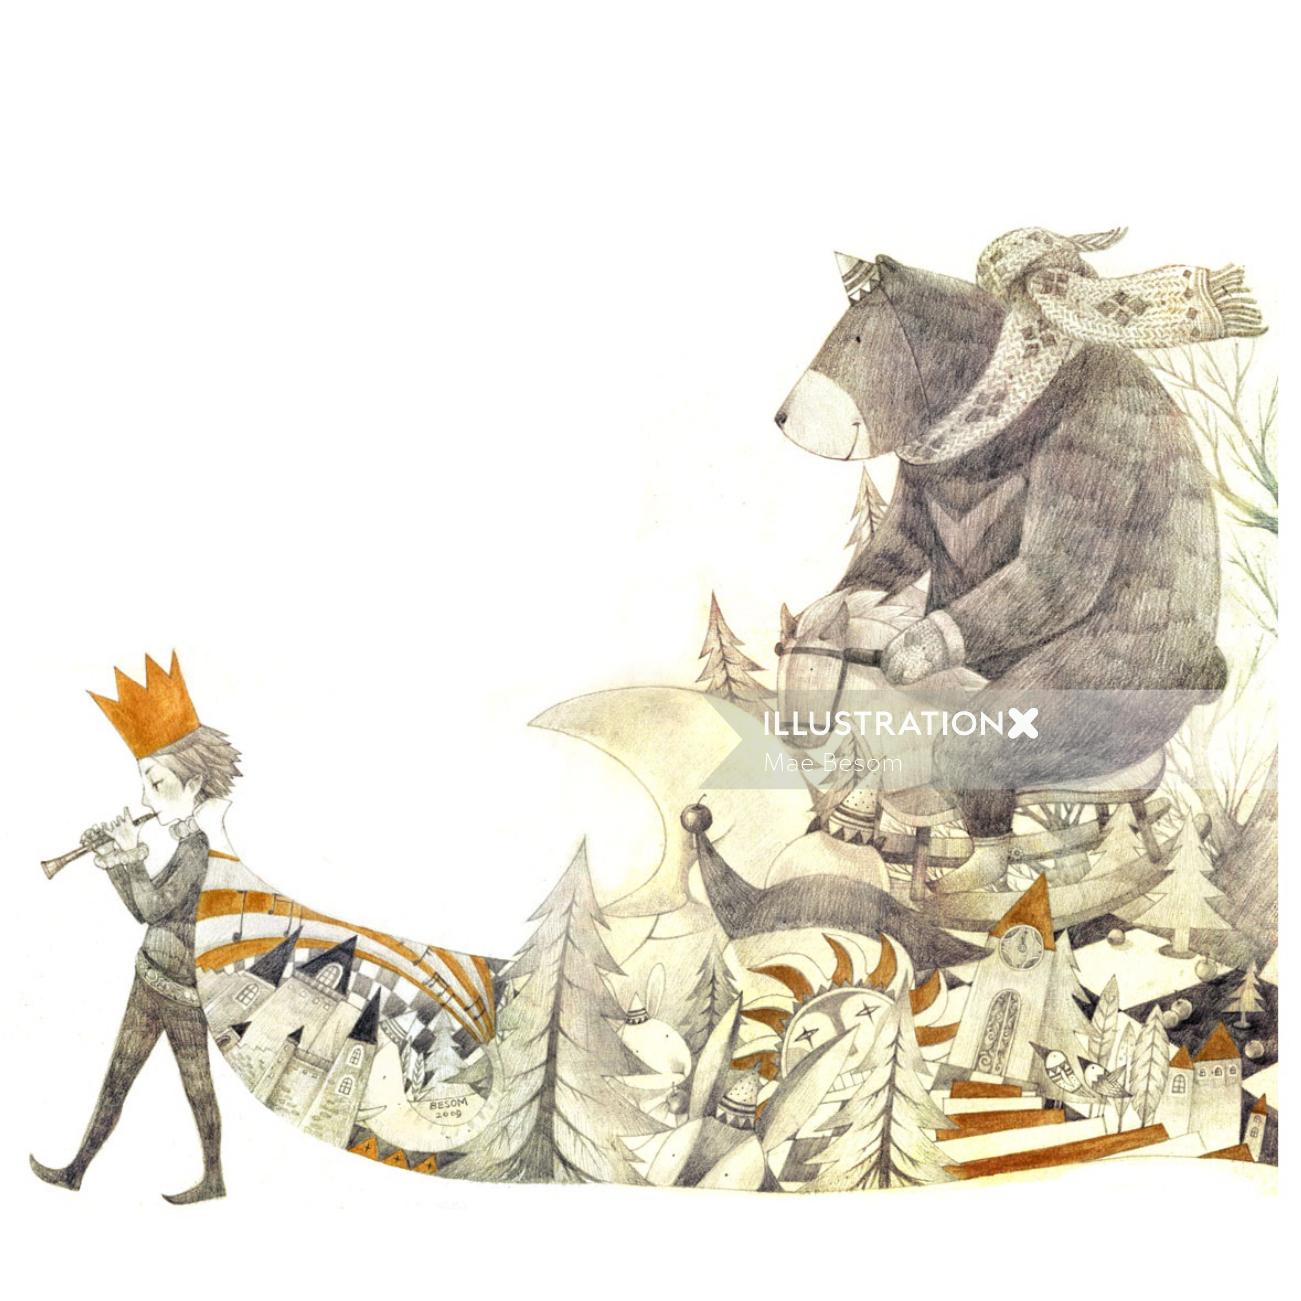 Children's book illustration by Mae Besom